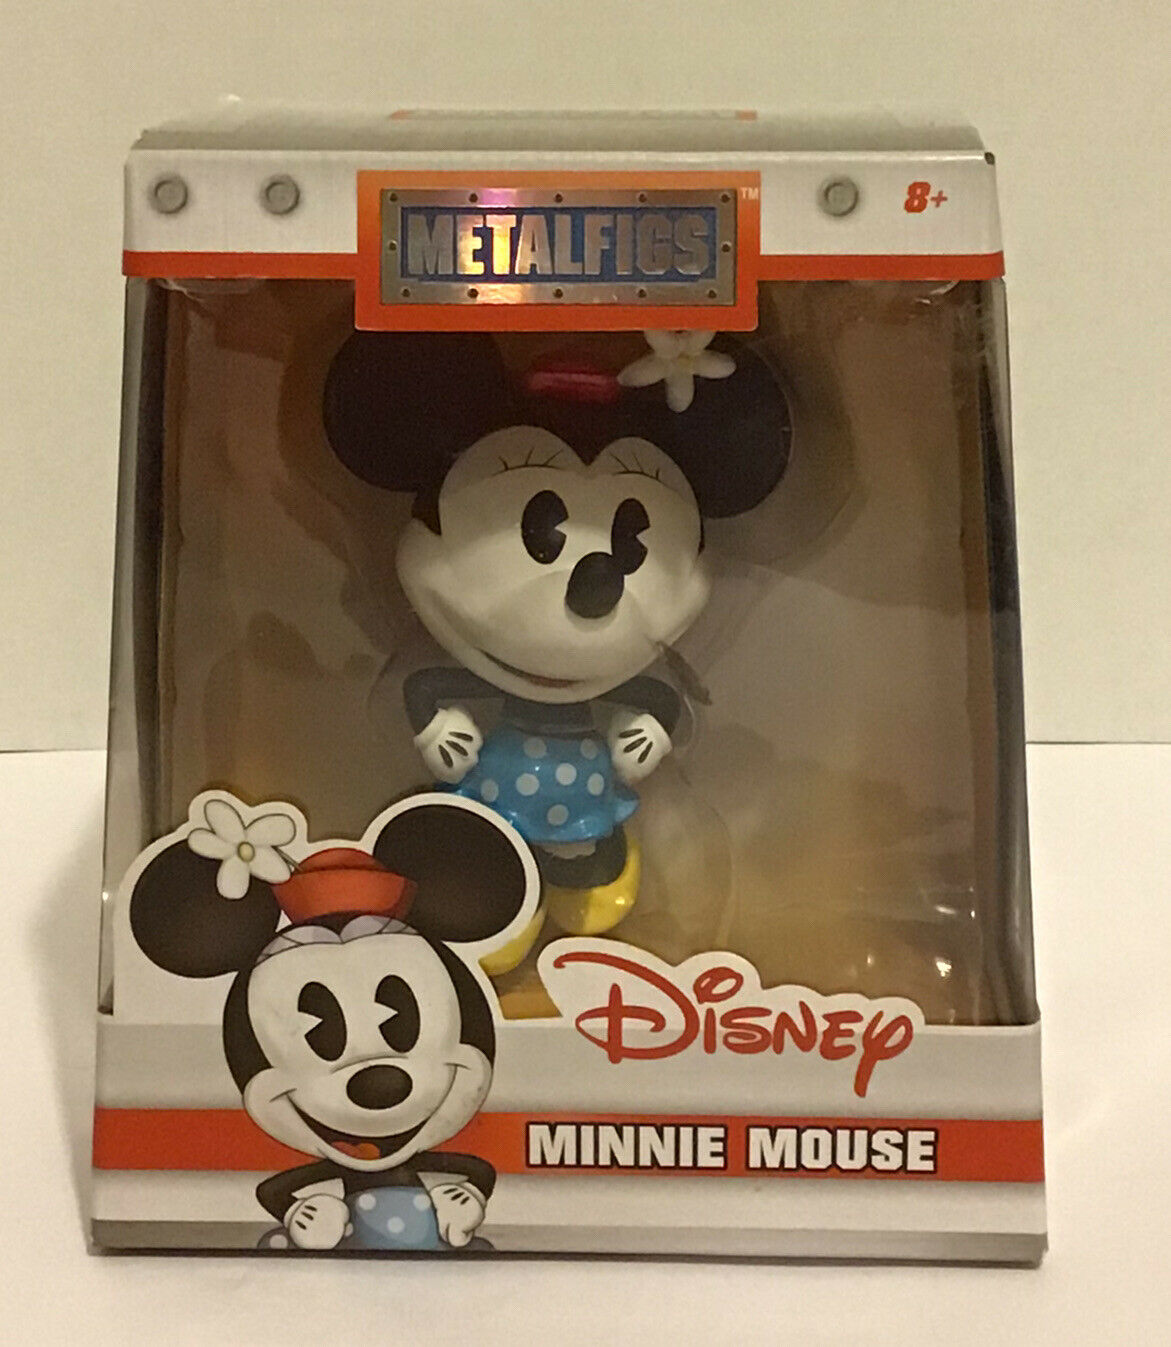 Disney’s Minnie Mouse 2017 Metalfigs Figure